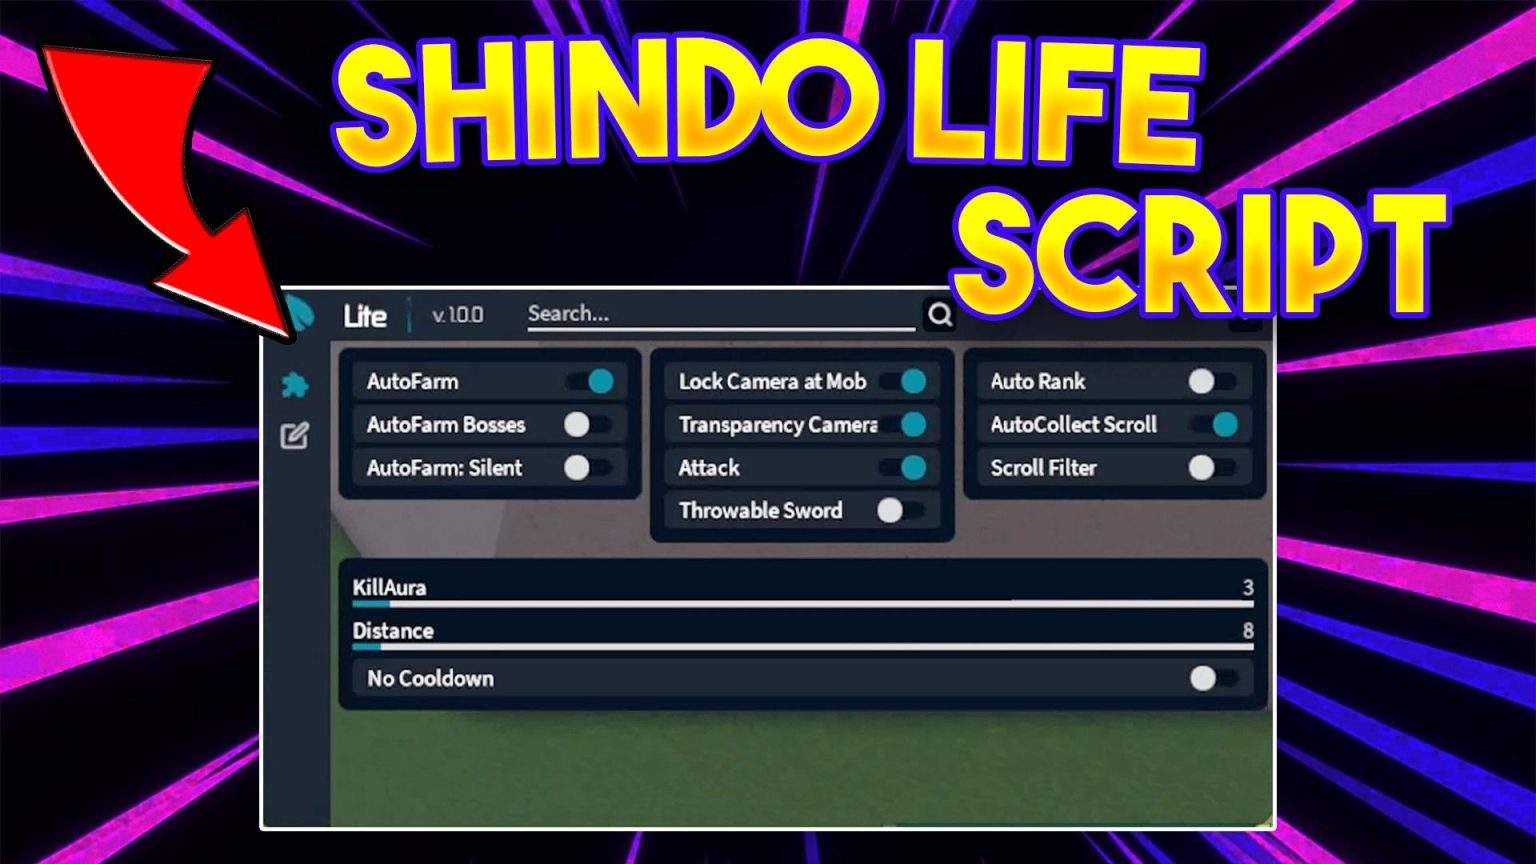 Shindo life script. Поинты для Шиндо лайф. Команды Шиндо лайф. Коды в Шиндо лайф 2022.